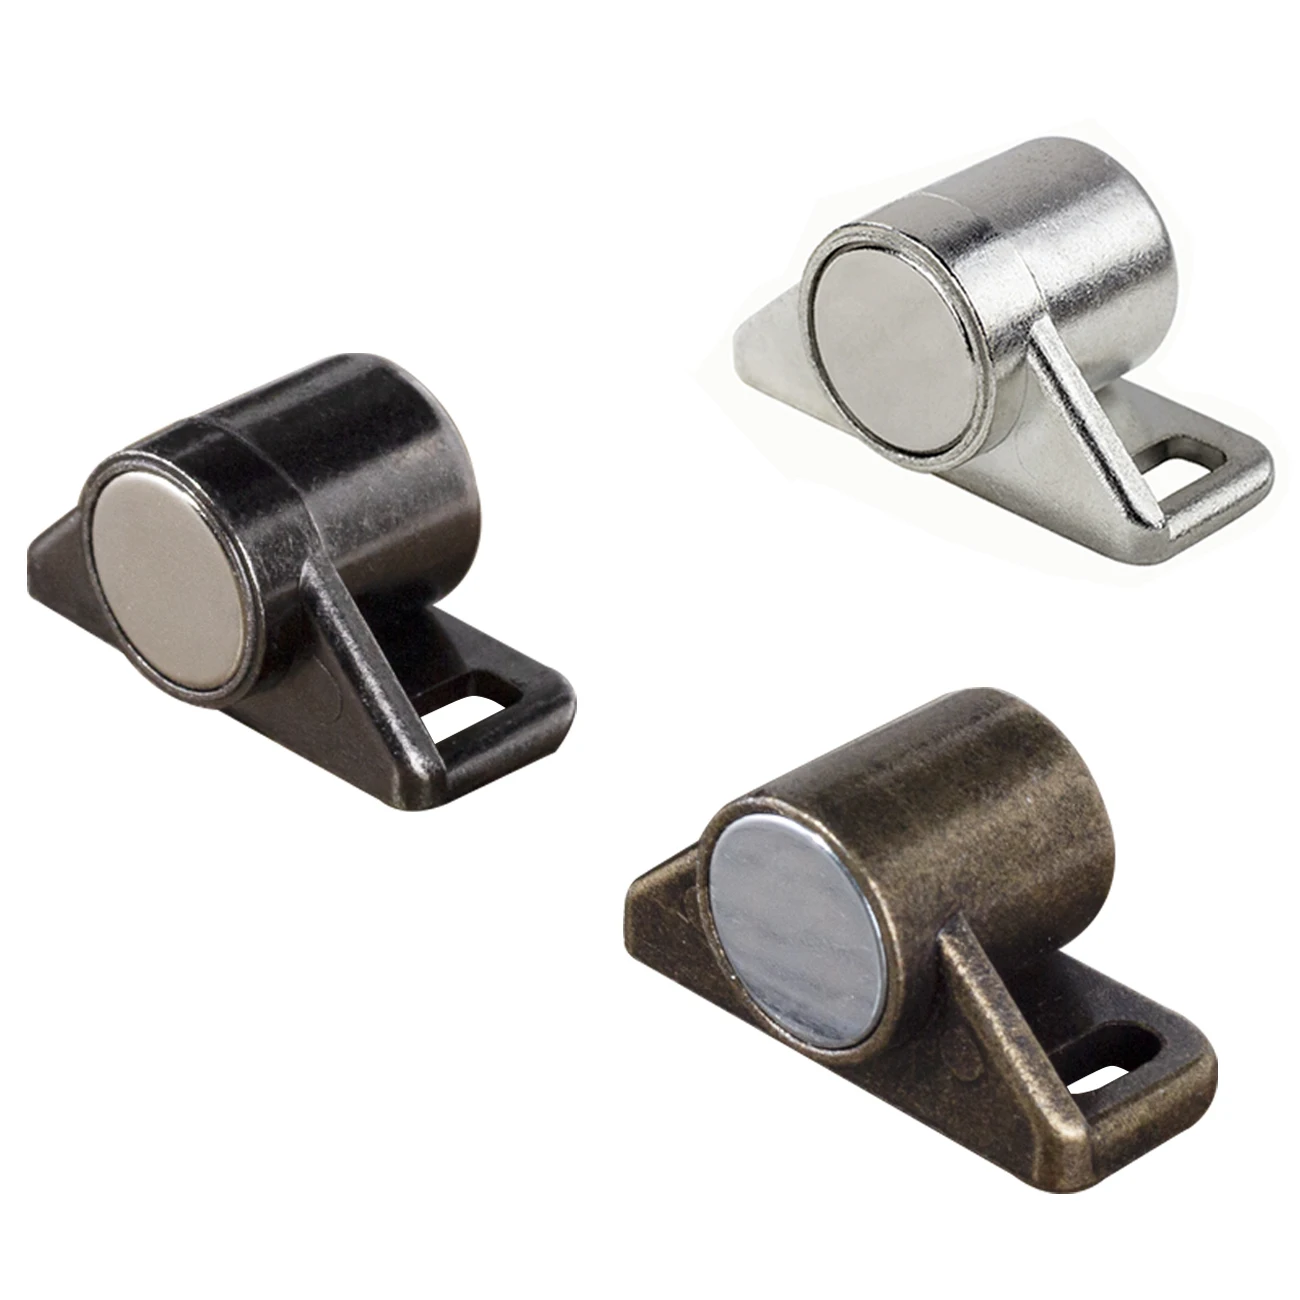 KeenKee Magnet Cabinet Door Catch, Magnetic Furniture Door Stopper, Closer, Strong Super Powerful Neodymium Magnets Latch